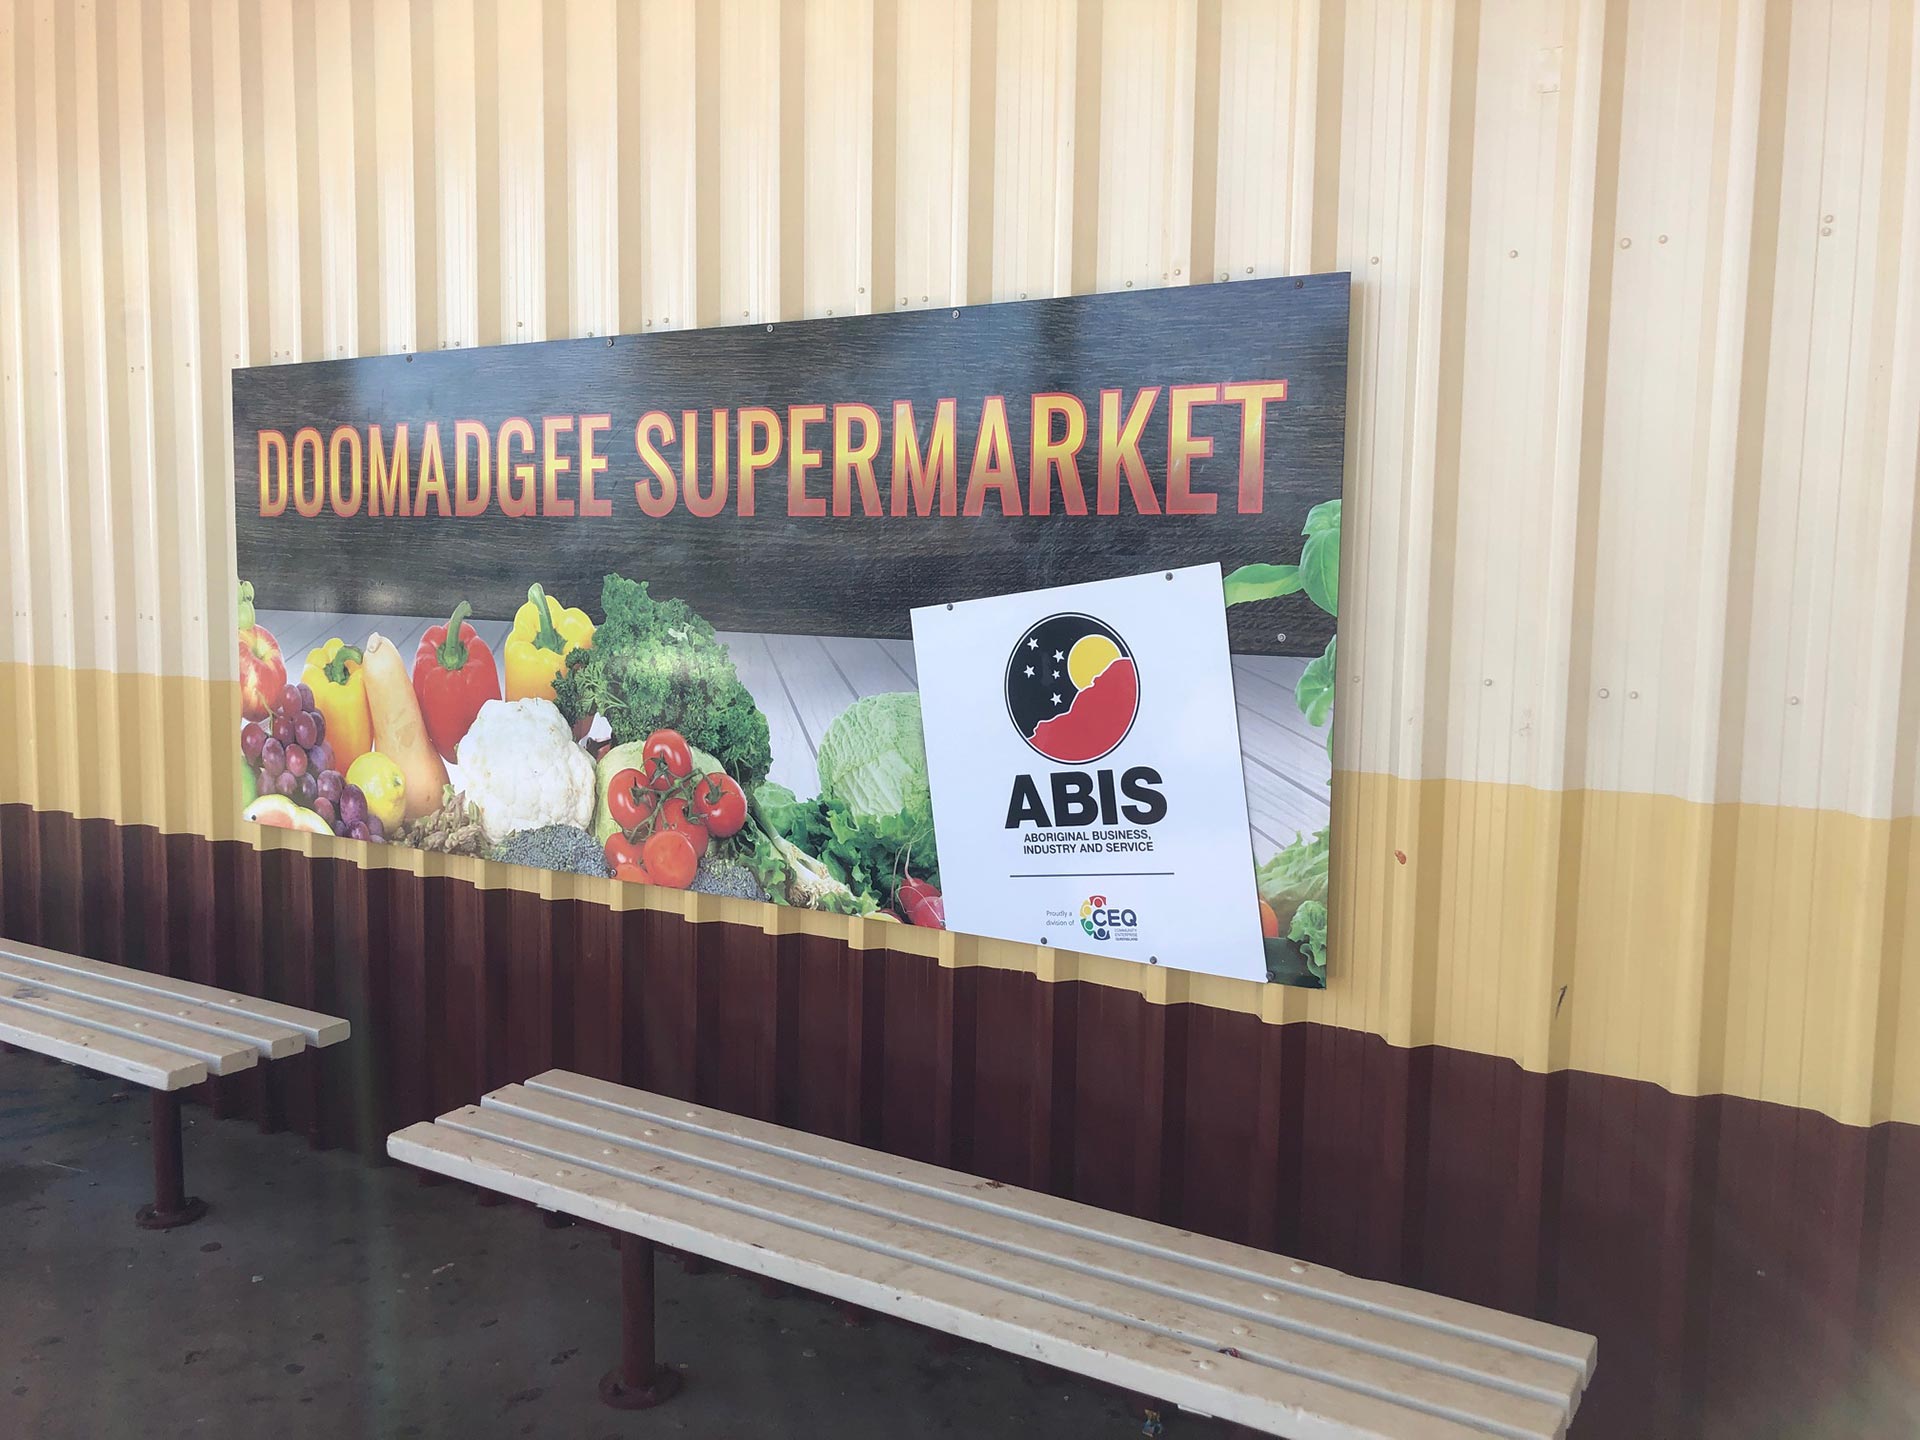 Doomadgee Supermarket